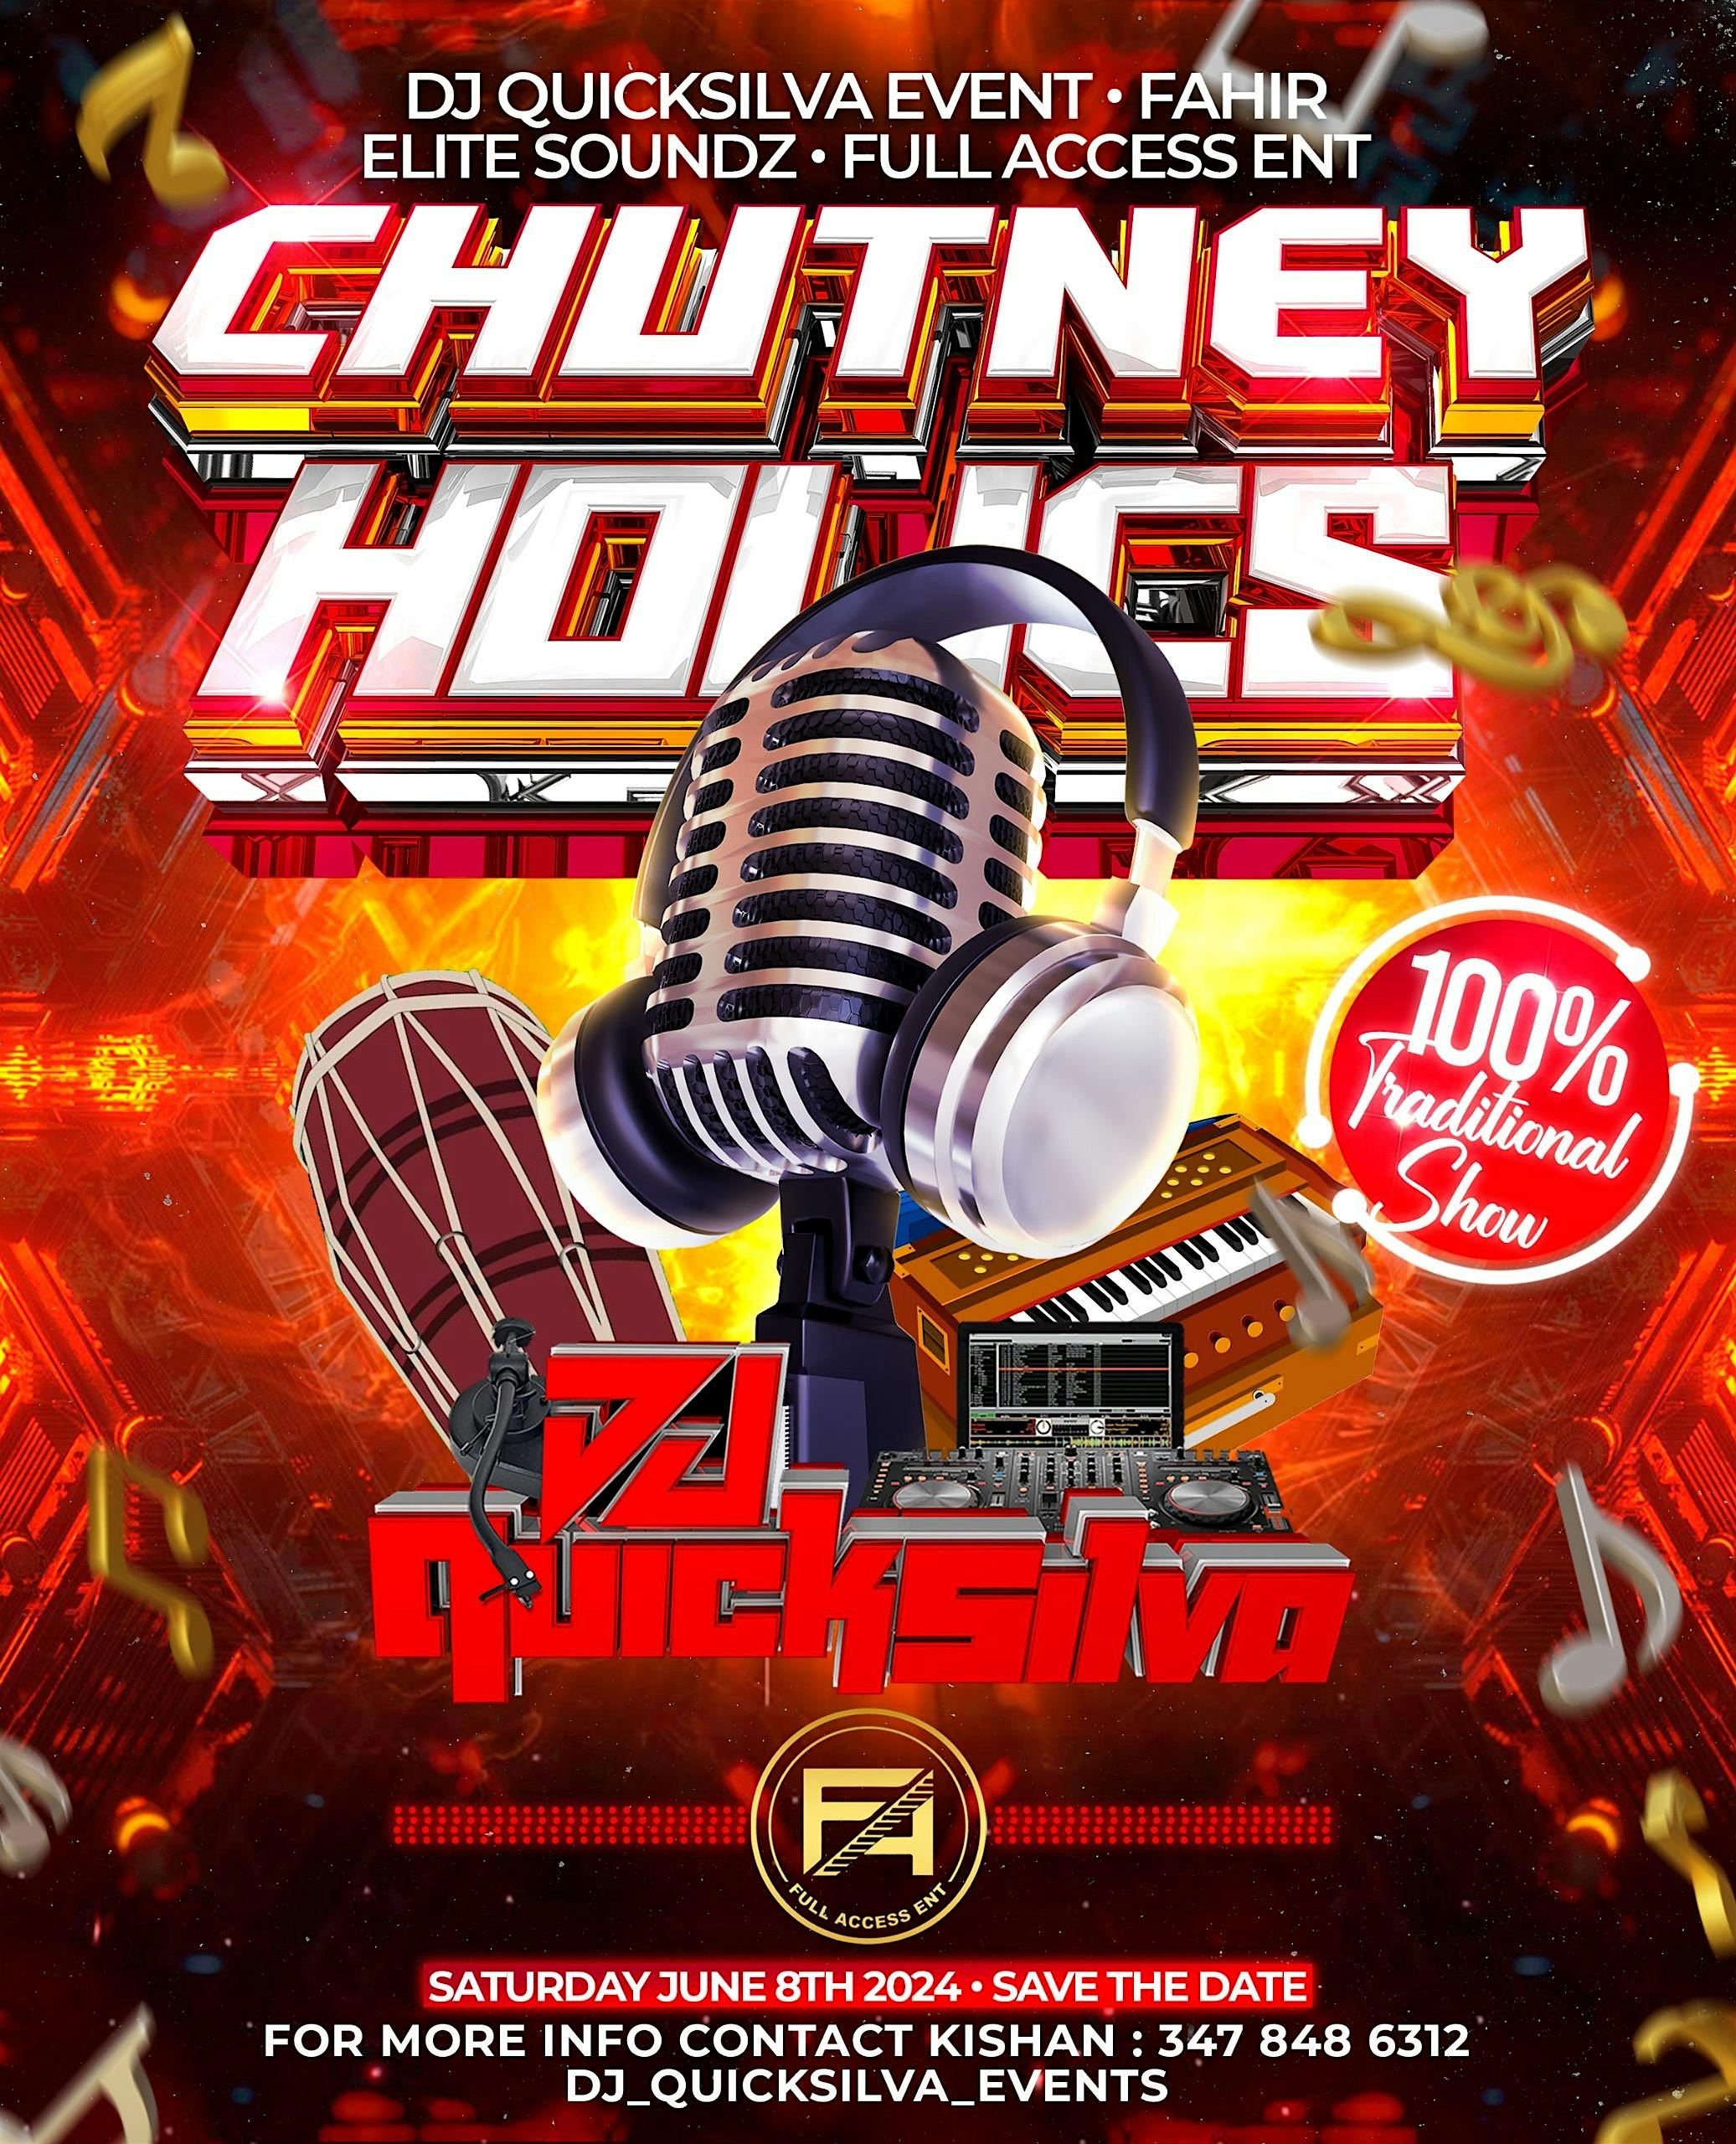 CHUTNEY-HOLICS 100% Traditional Chutney Show